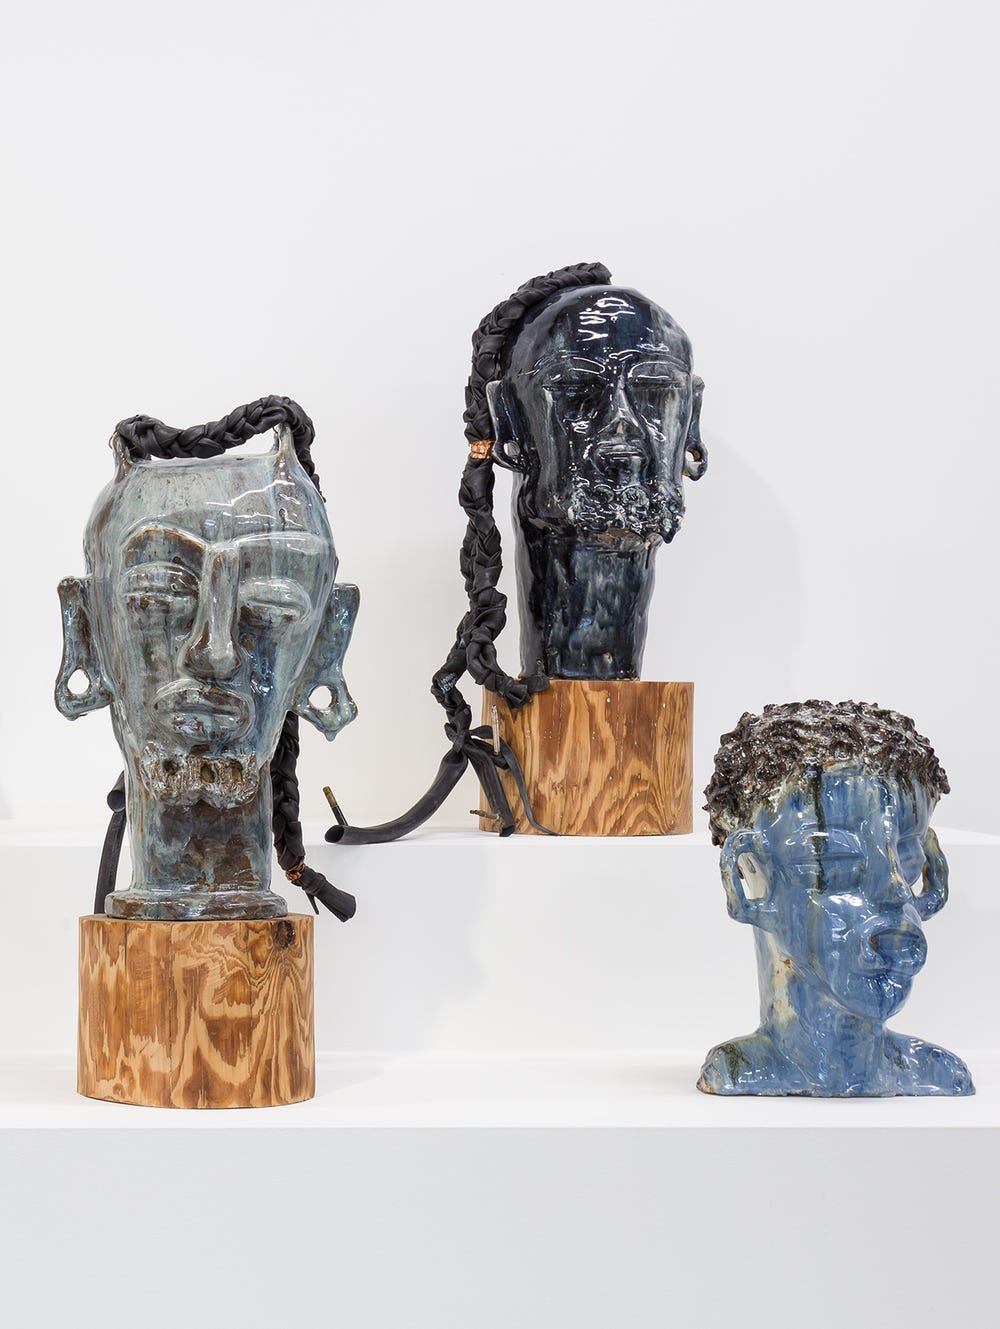 Sculptures by Leilah Babirye displayed in a gallery